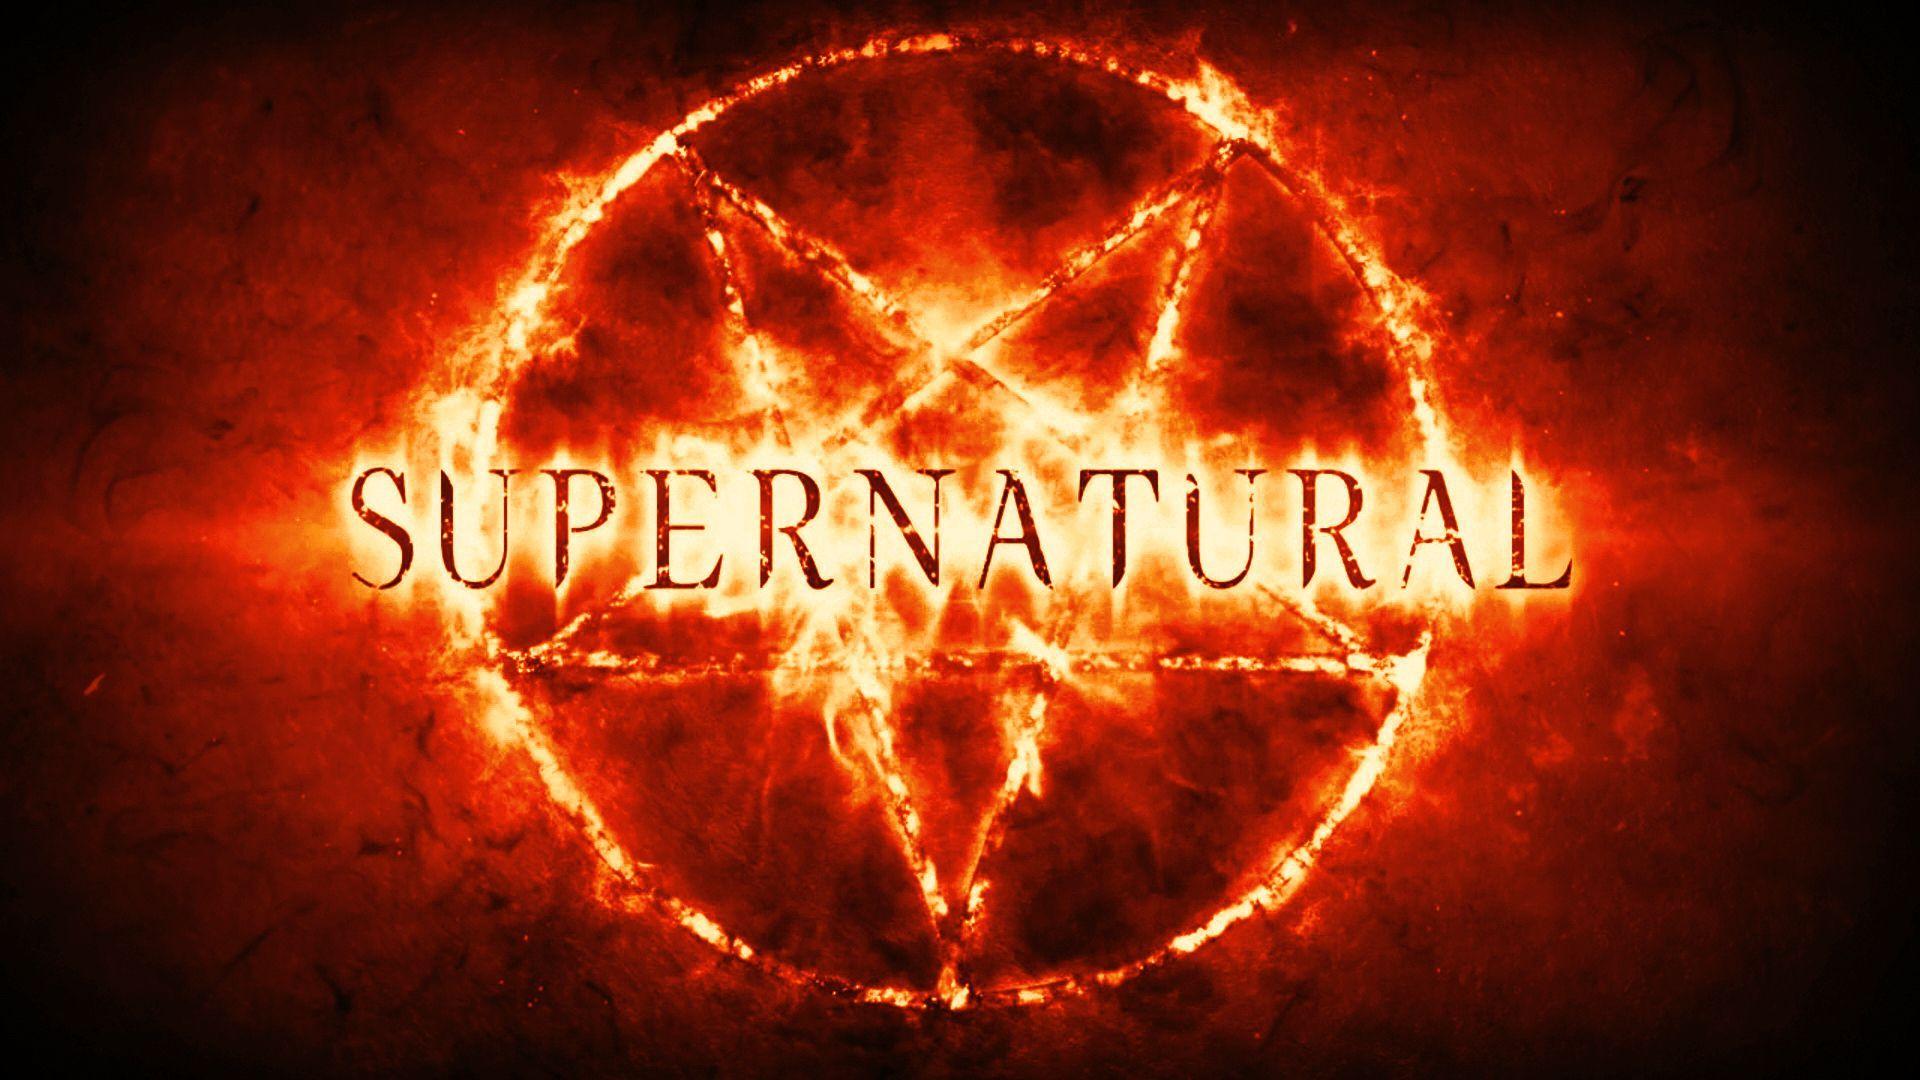 Supernatural Logo - Pin by Rostislava Gecova on Supernatural | Pinterest | Supernatural ...